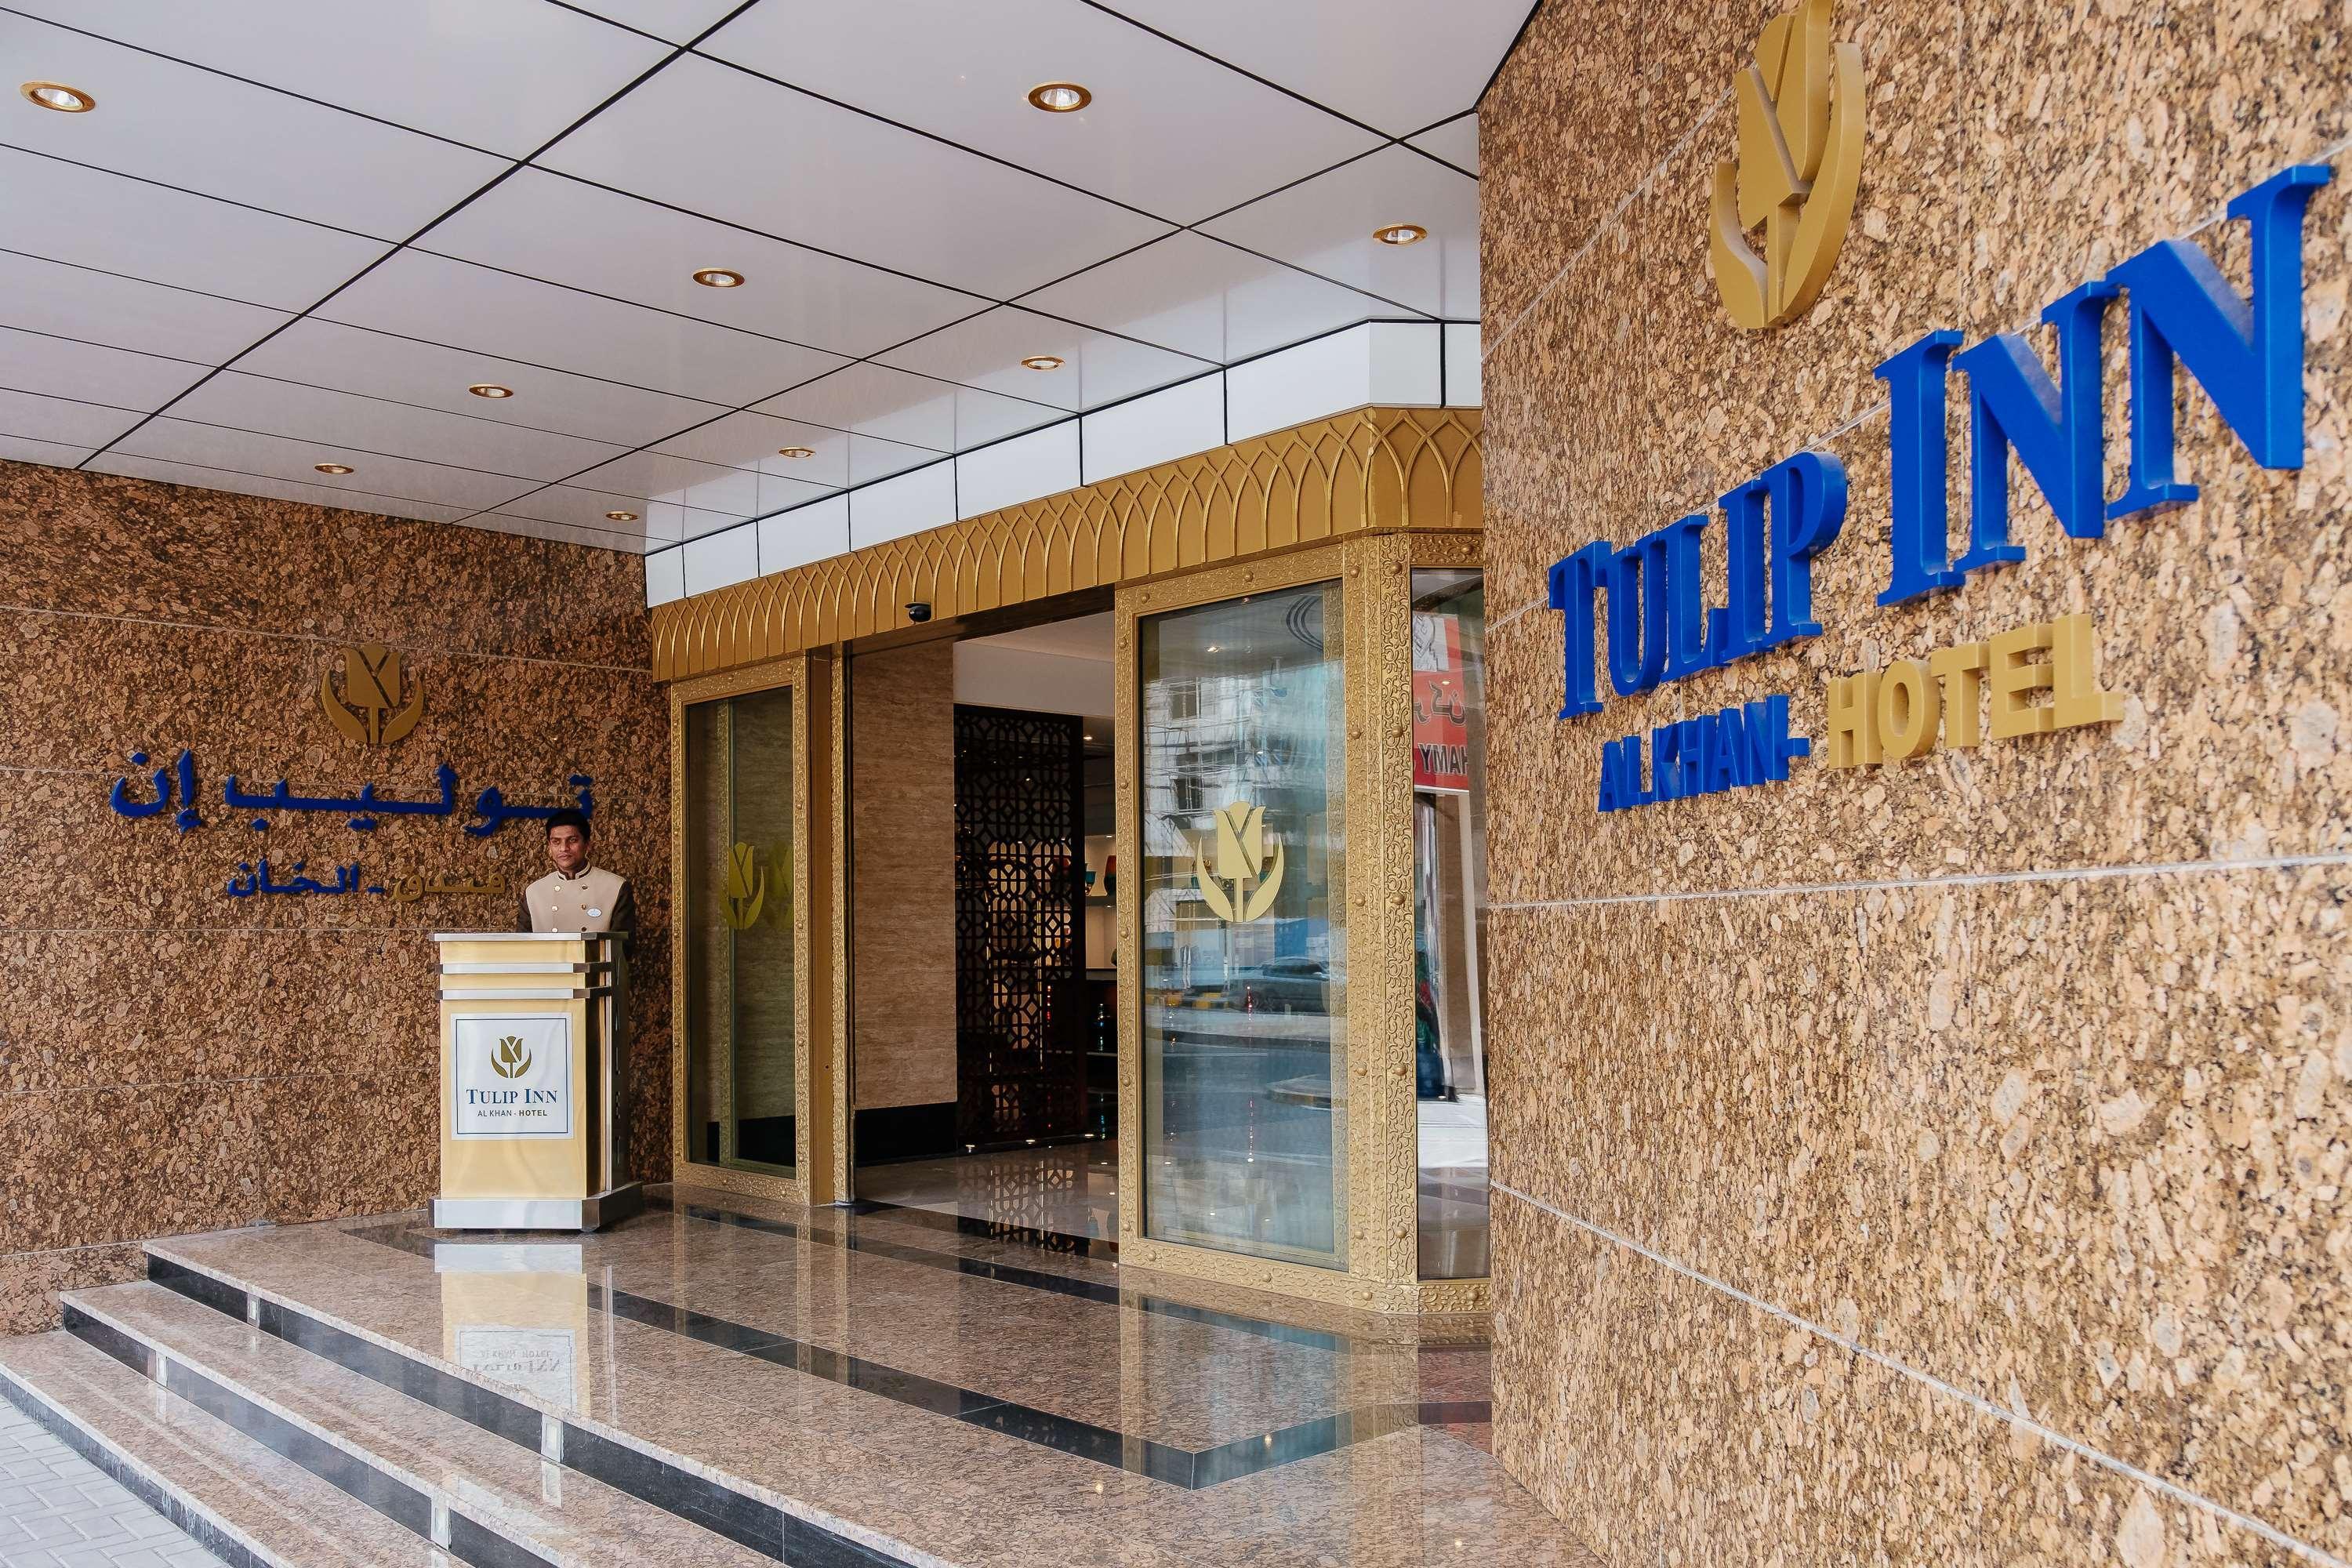 Tulip Inn Al Khan Hotel Sharjah Exterior photo